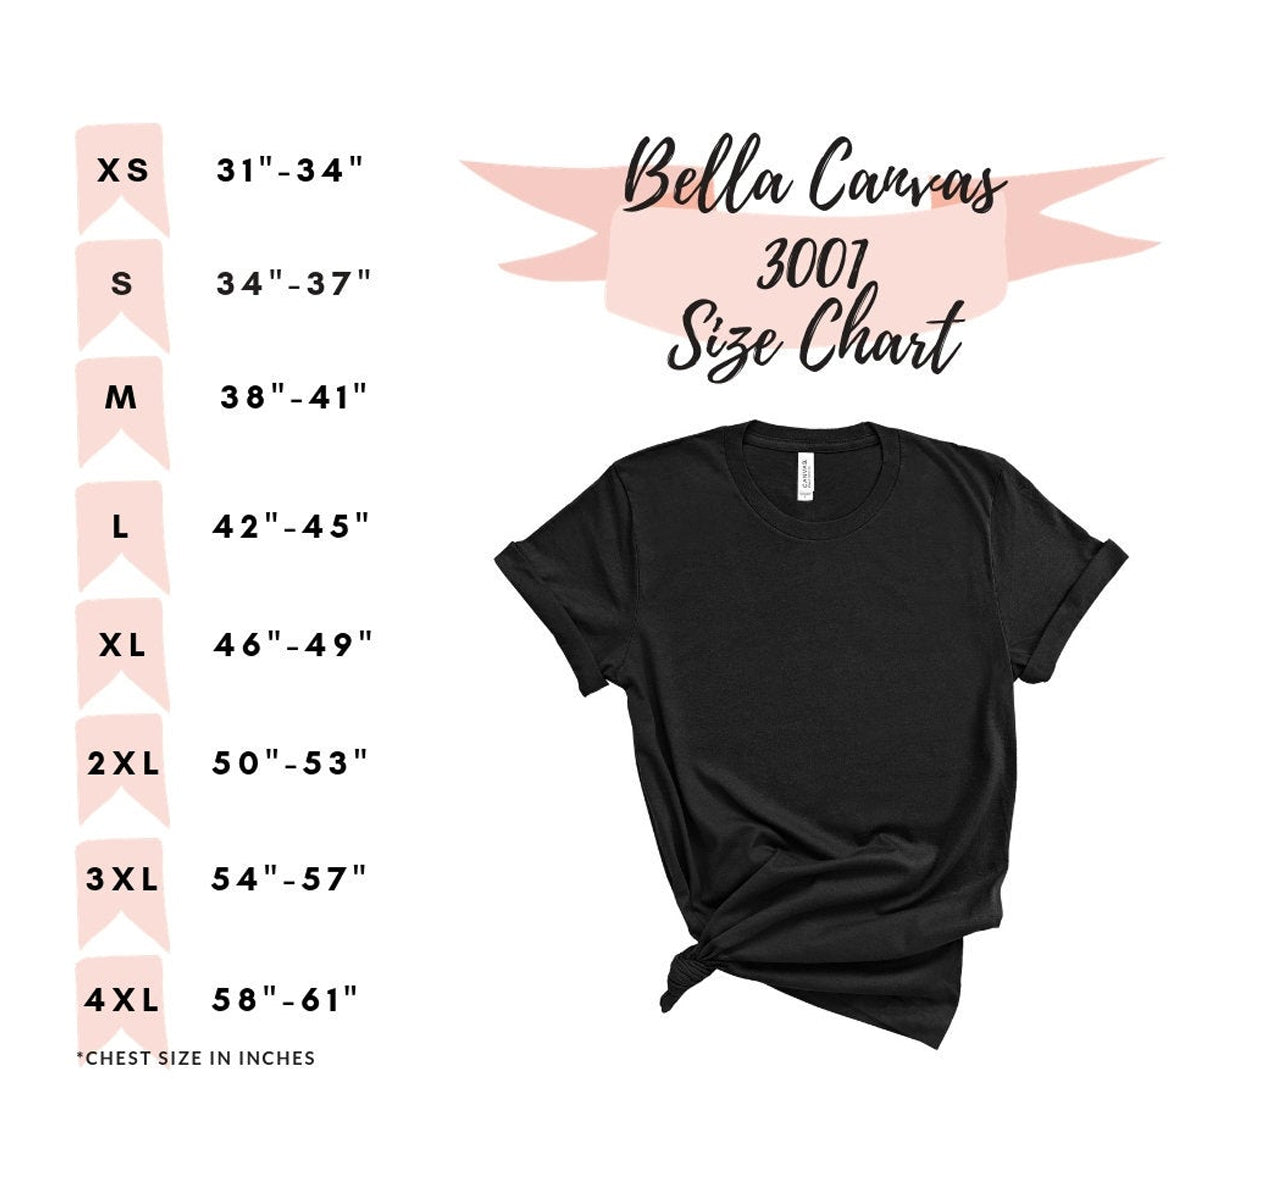 Cat t-shirt size chart